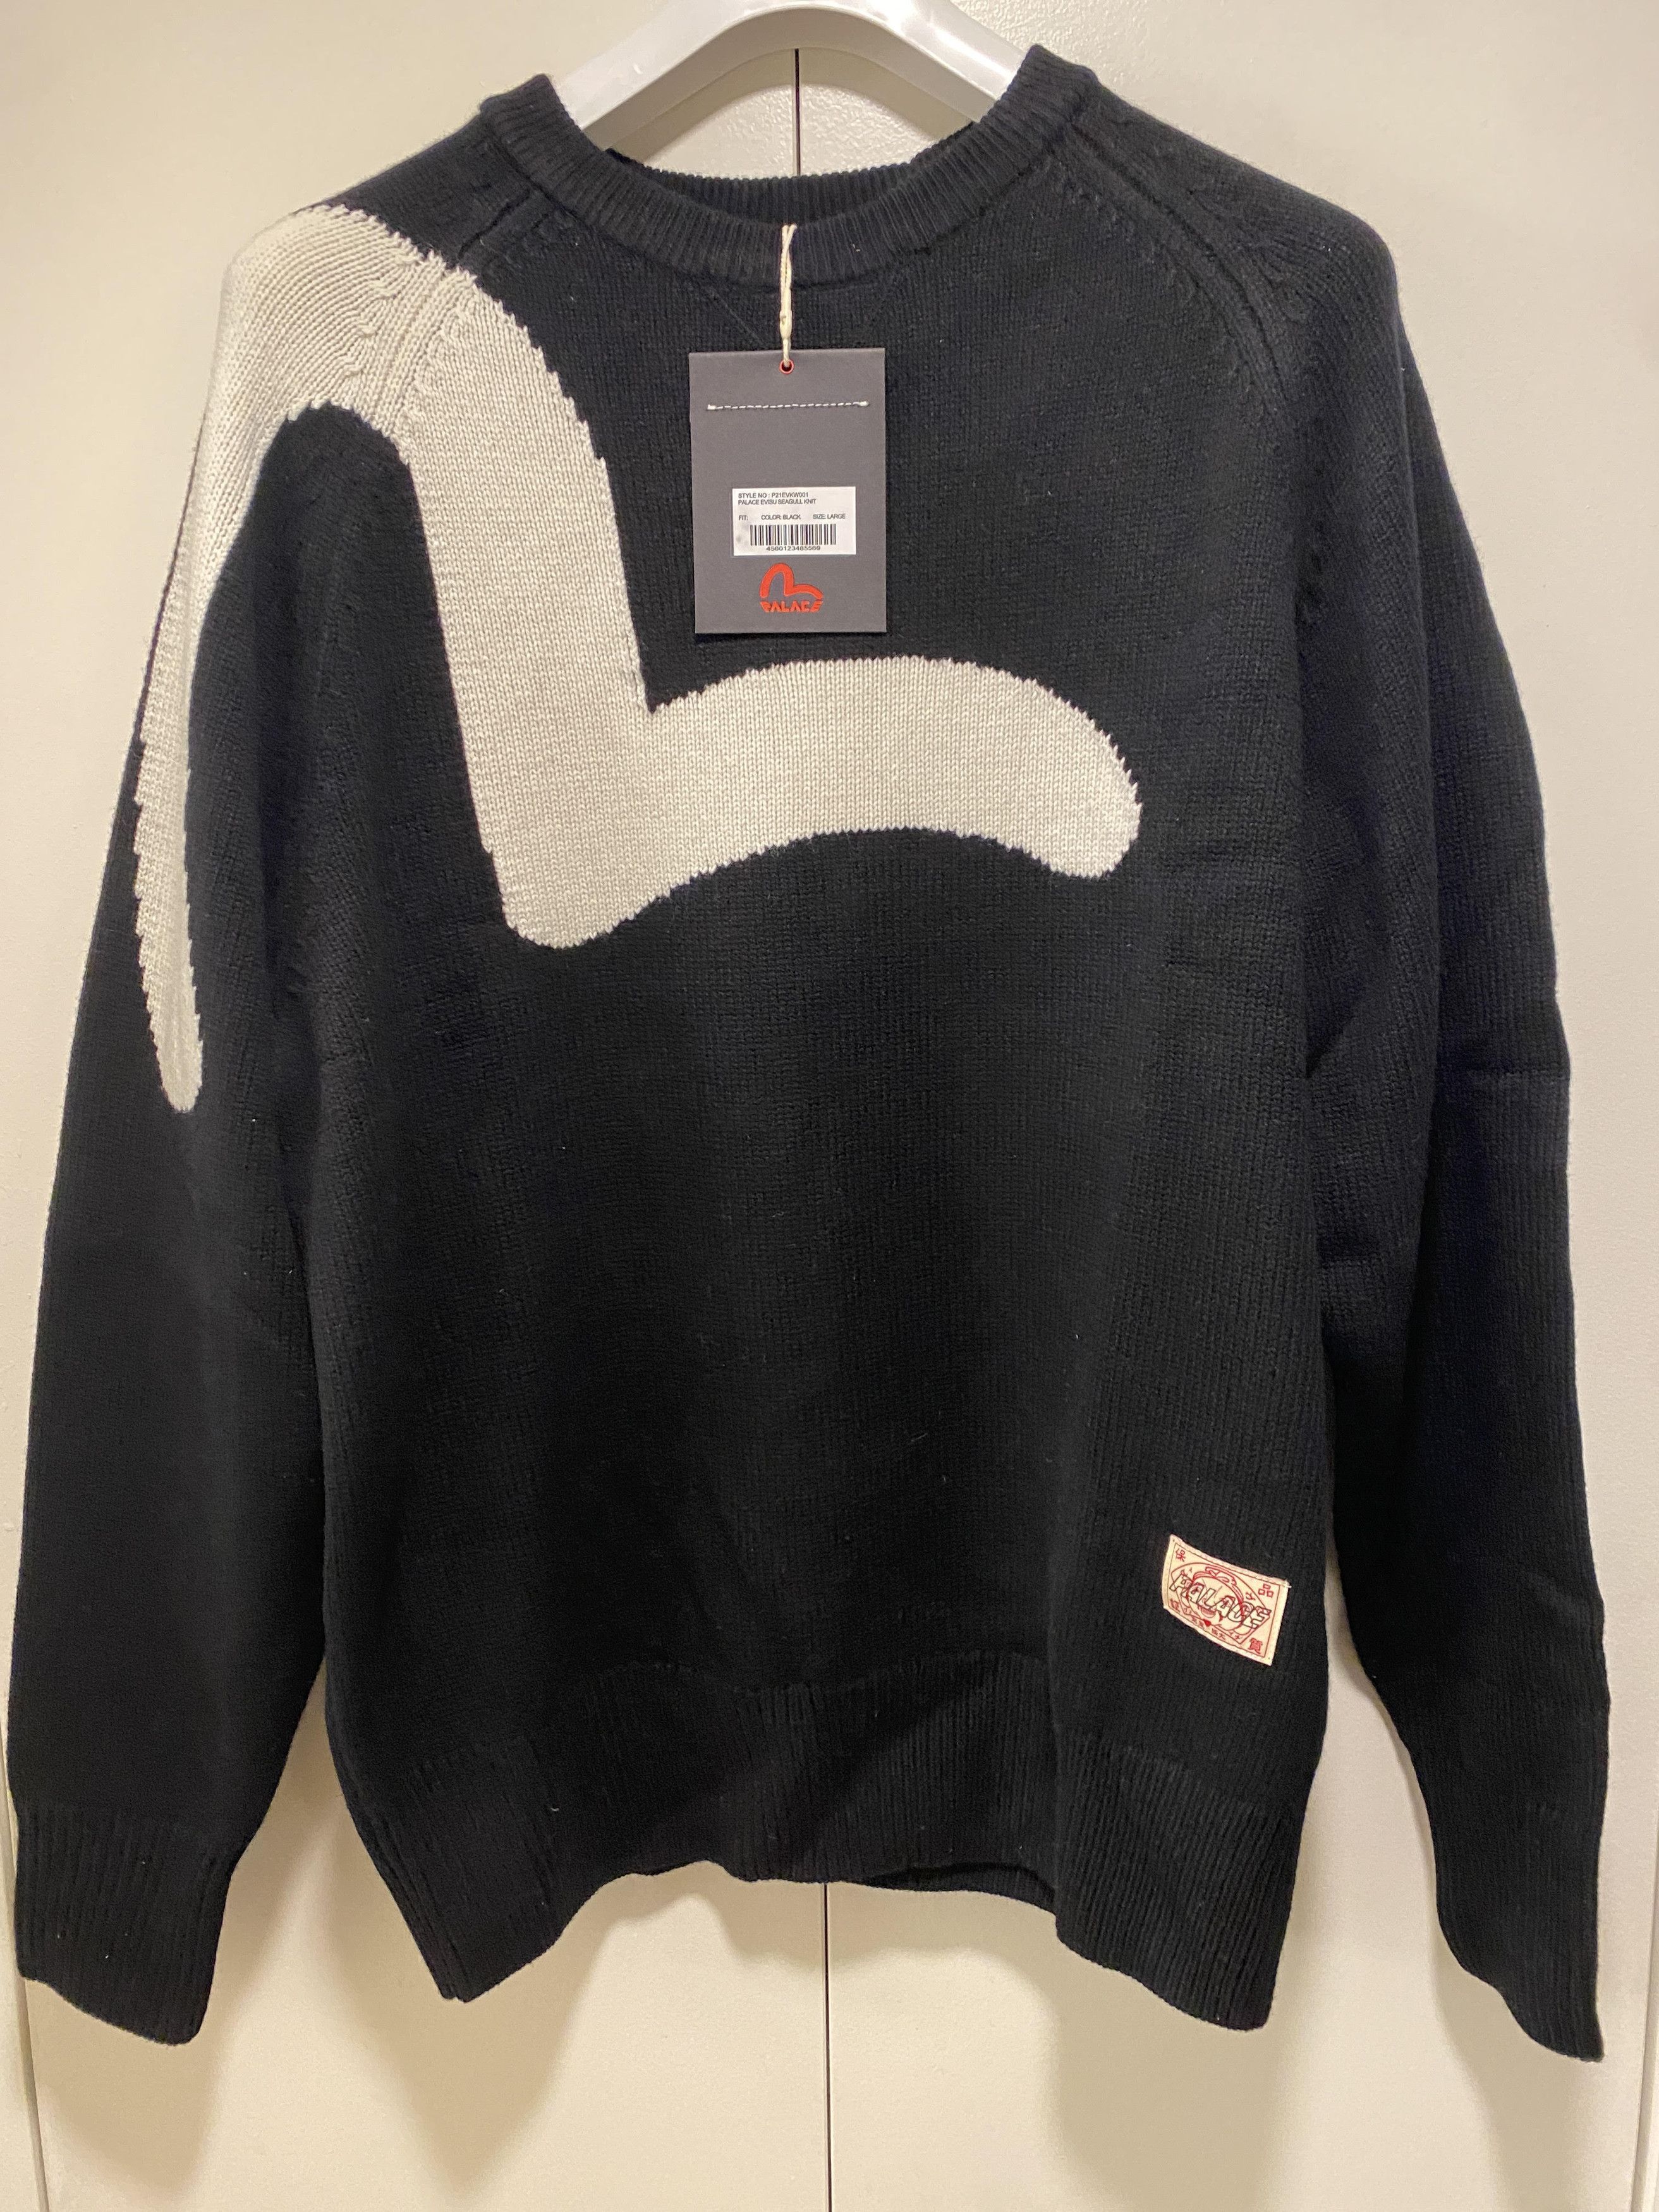 Pre-owned Evisu X Palace Evisu Seagull Knit Black Sweater Size Large